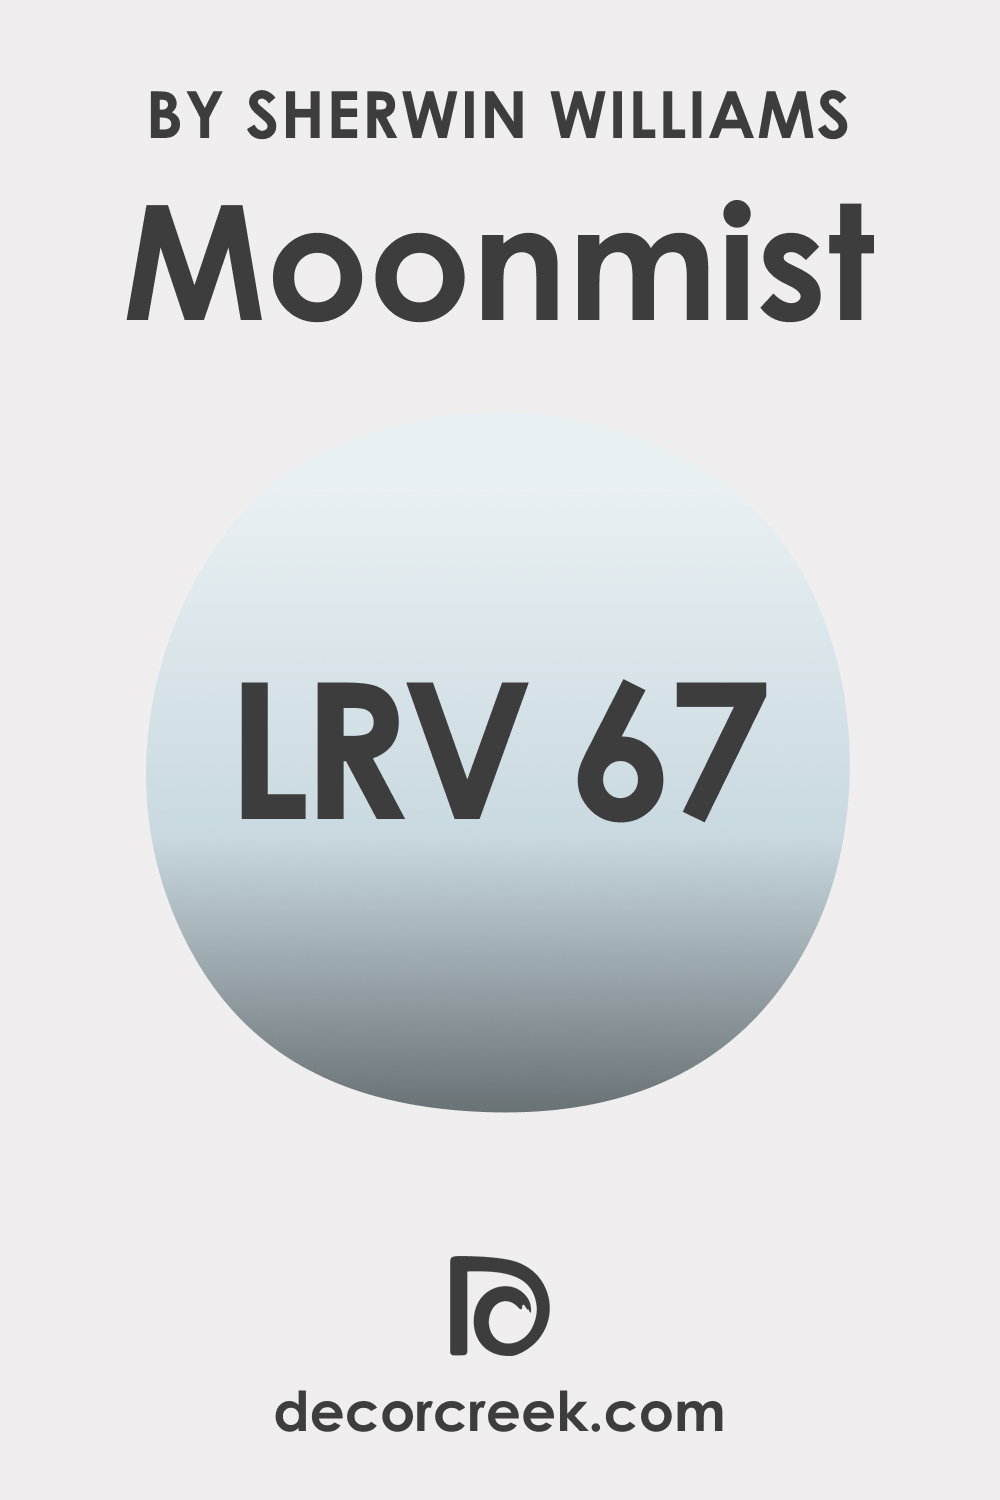 What LRV Does Moonmist SW-9144 Paint Color Have?